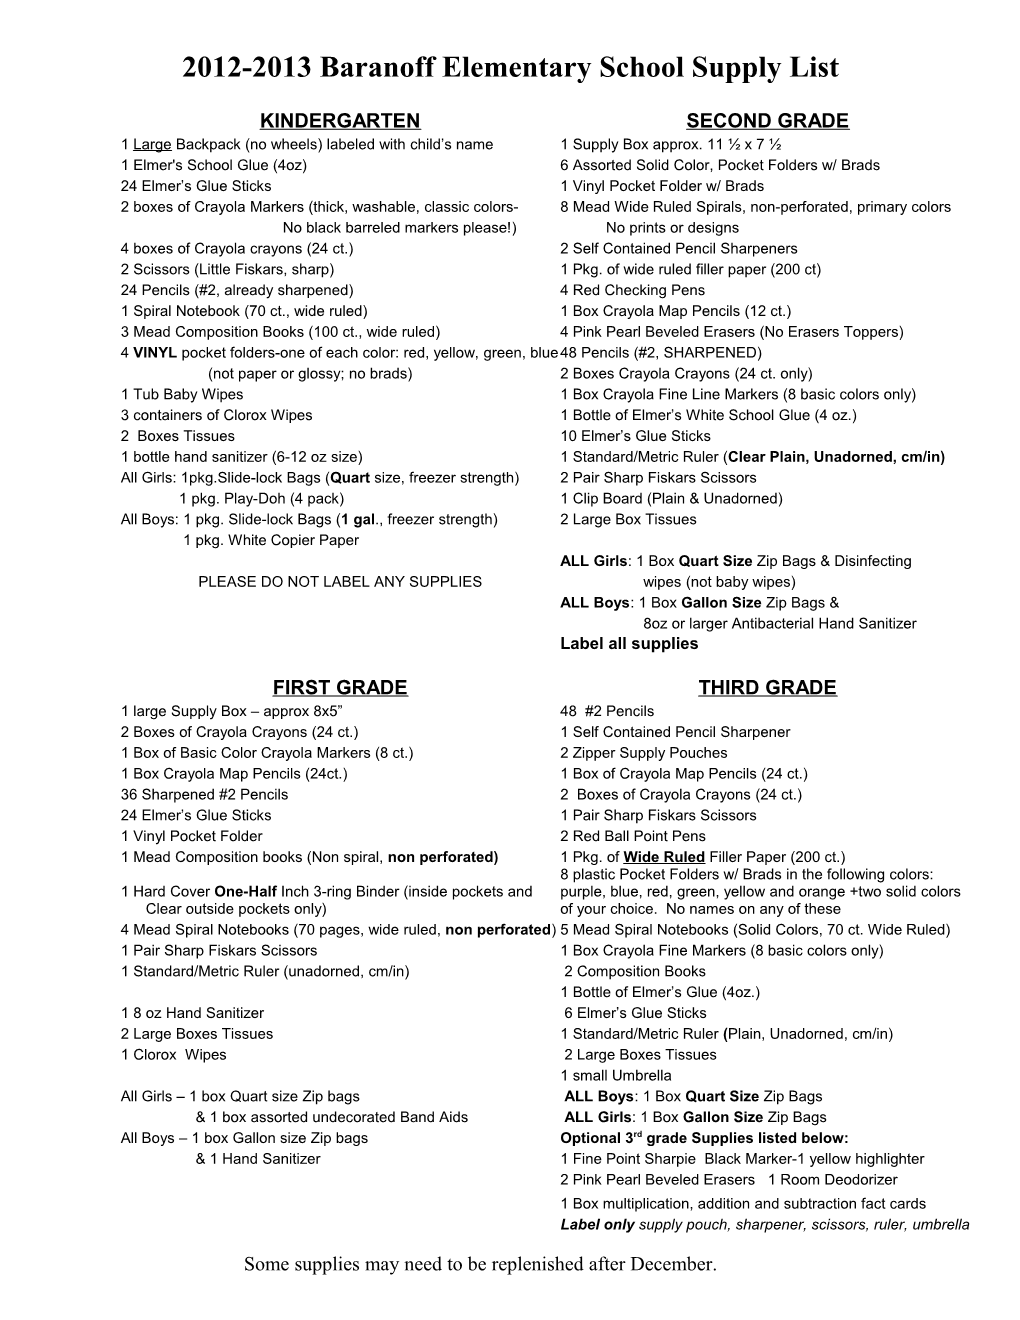 2012-2013Baranoff Elementary School Supply List